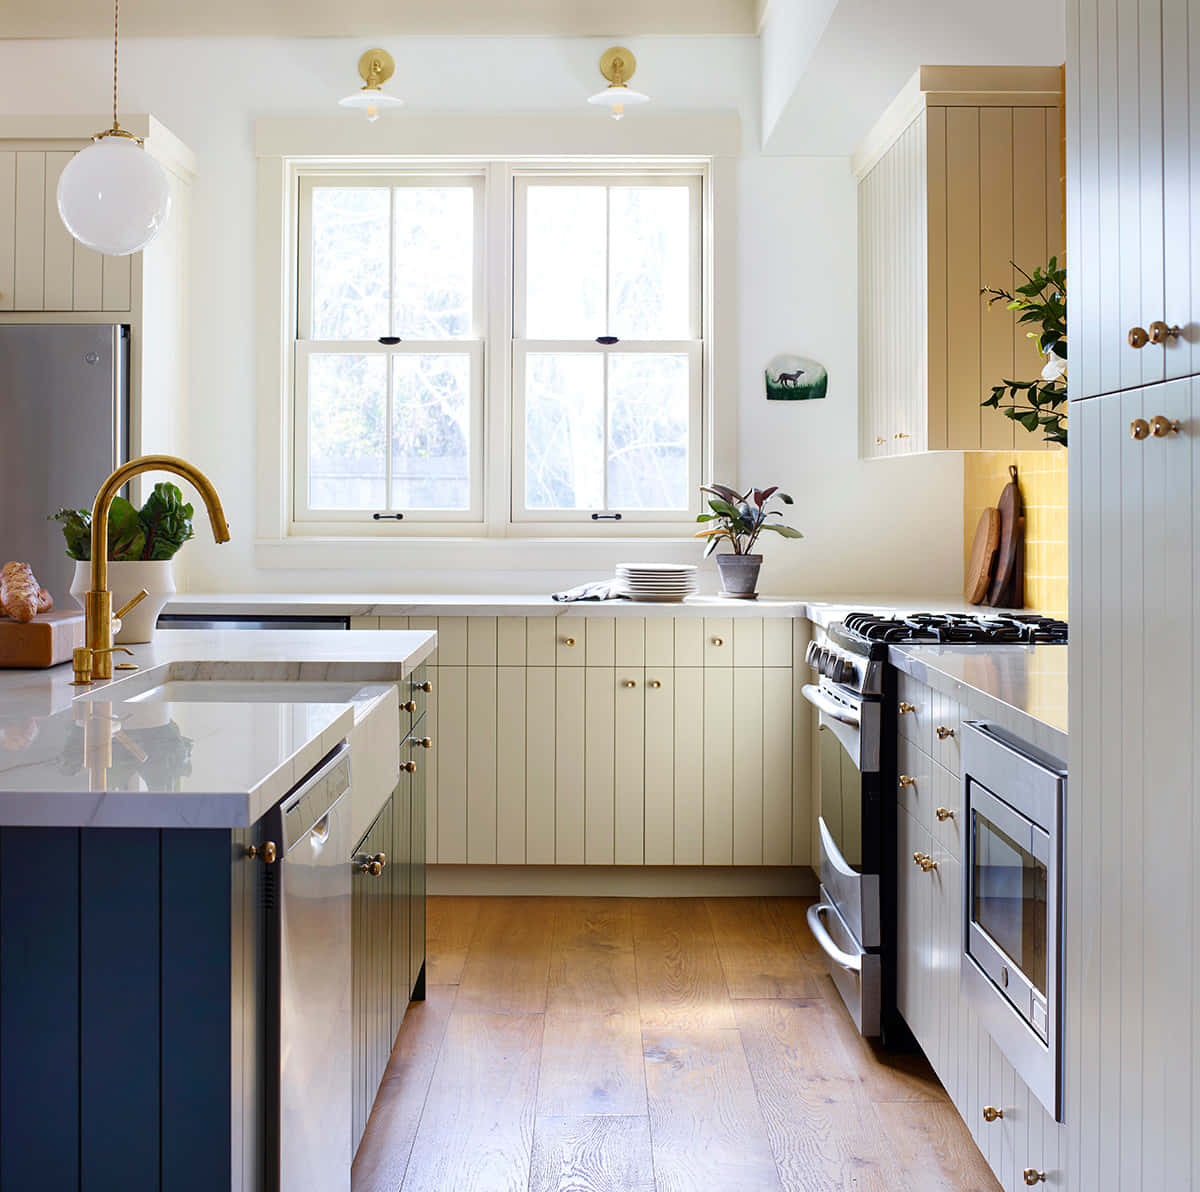 Home Interior Modern Minimalistic Kitchen Pictures